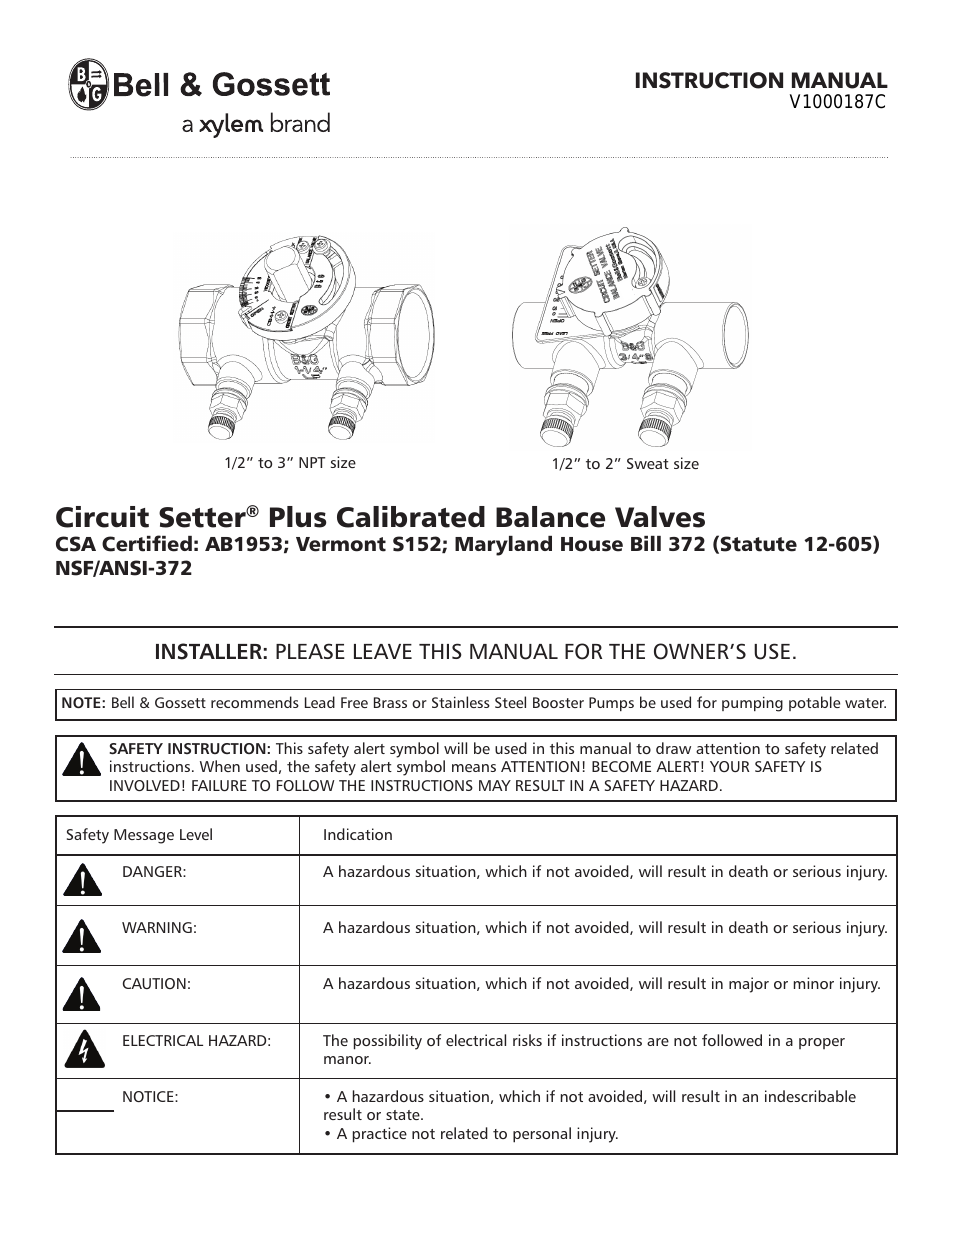 V1000187C Circuit Setter Plus Calibrated Balance Valves – Lead-Free